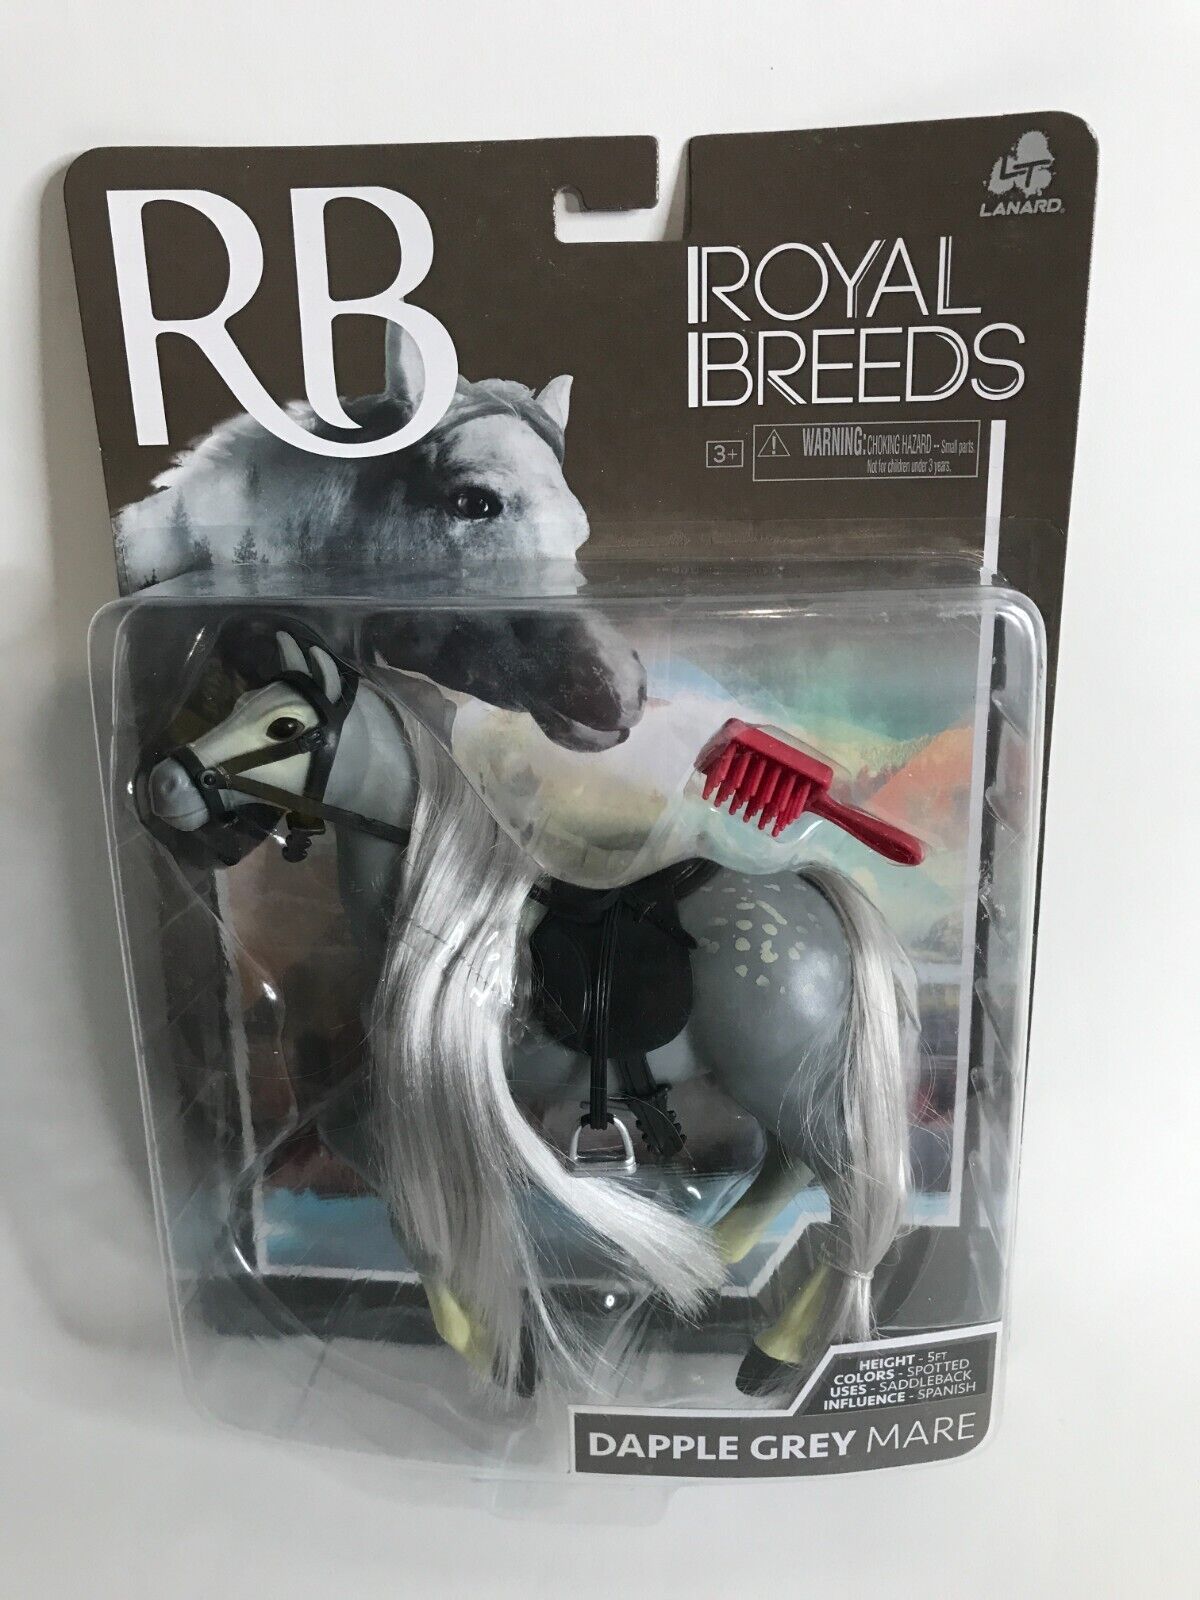 Lanard Royal Breeds Dapple Grey Mare  8” Horse Figure Horse Toy New